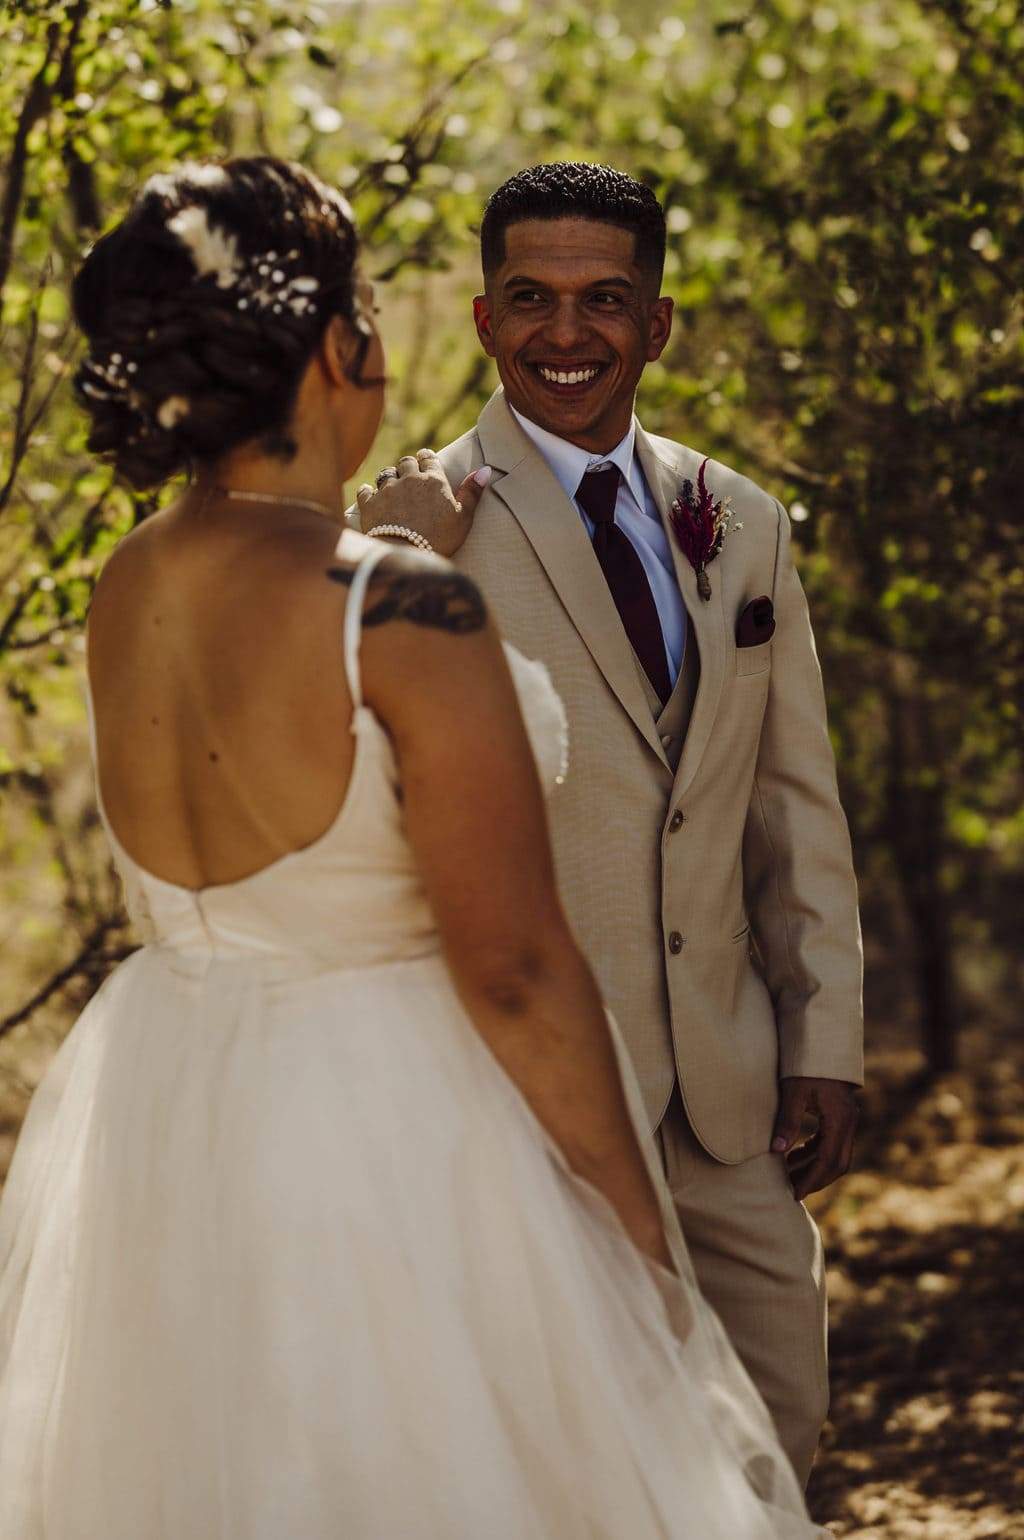 First Look at Venetucci Farms | Colorado Springs Wedding Photographer | Venetucci Farms Wedding